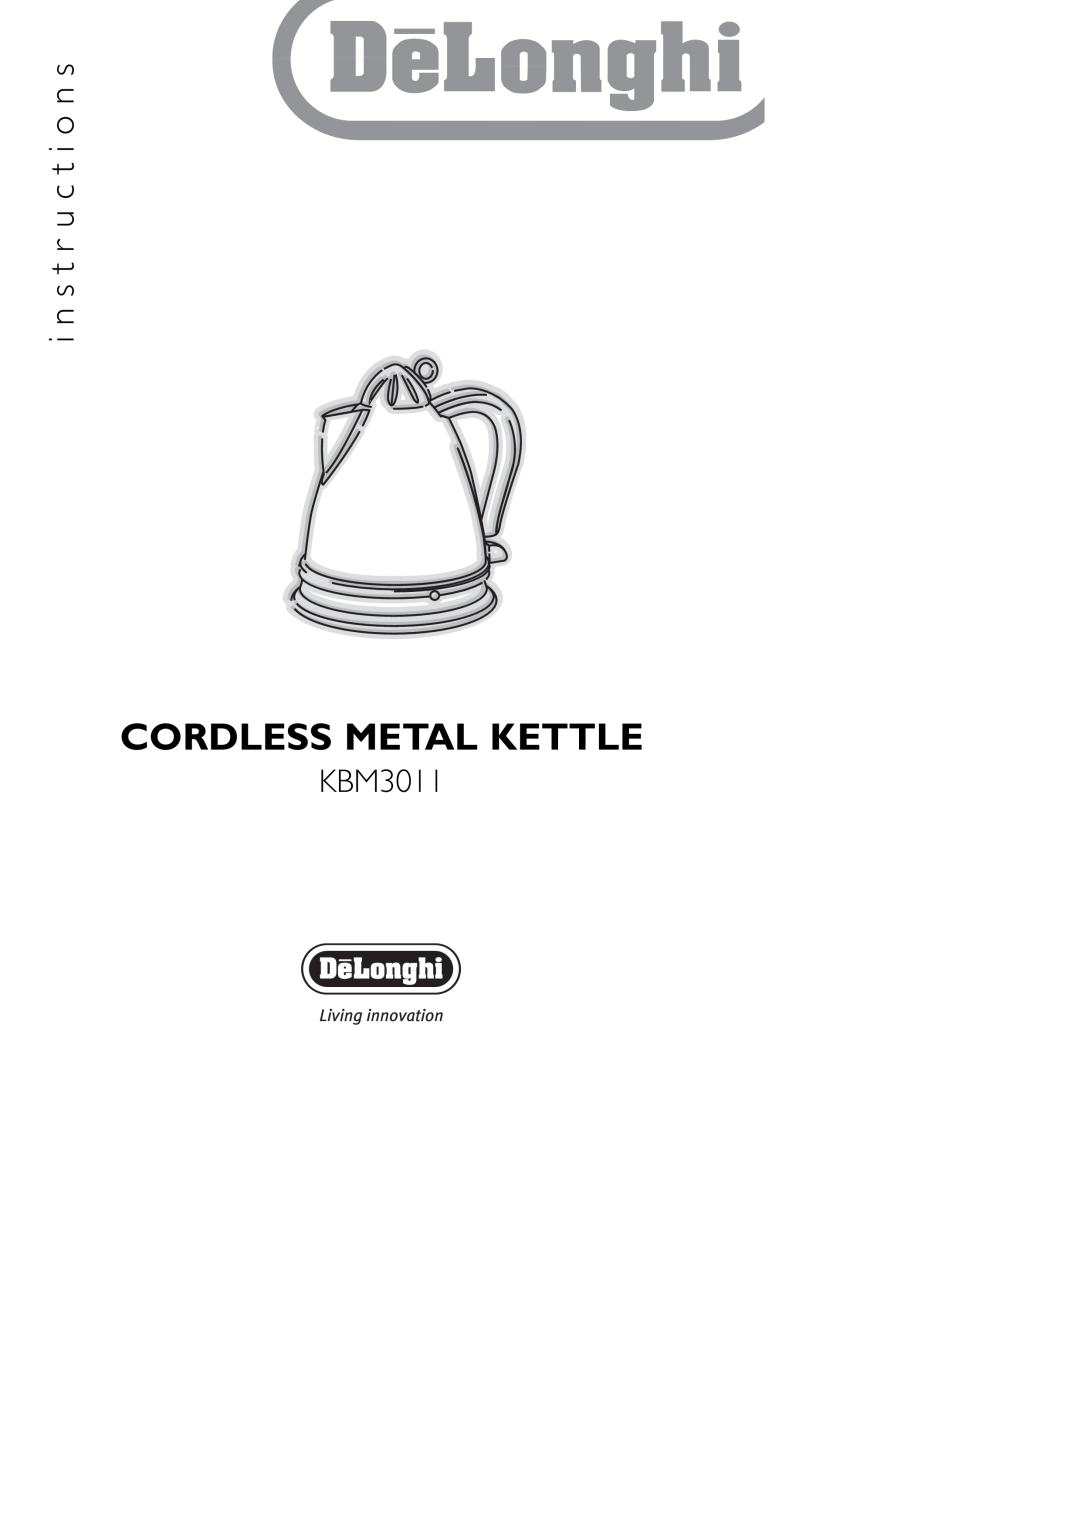 DeLonghi KBM3011 manual Cordless Metal, Kettle, i n s t r u c t i o n s 